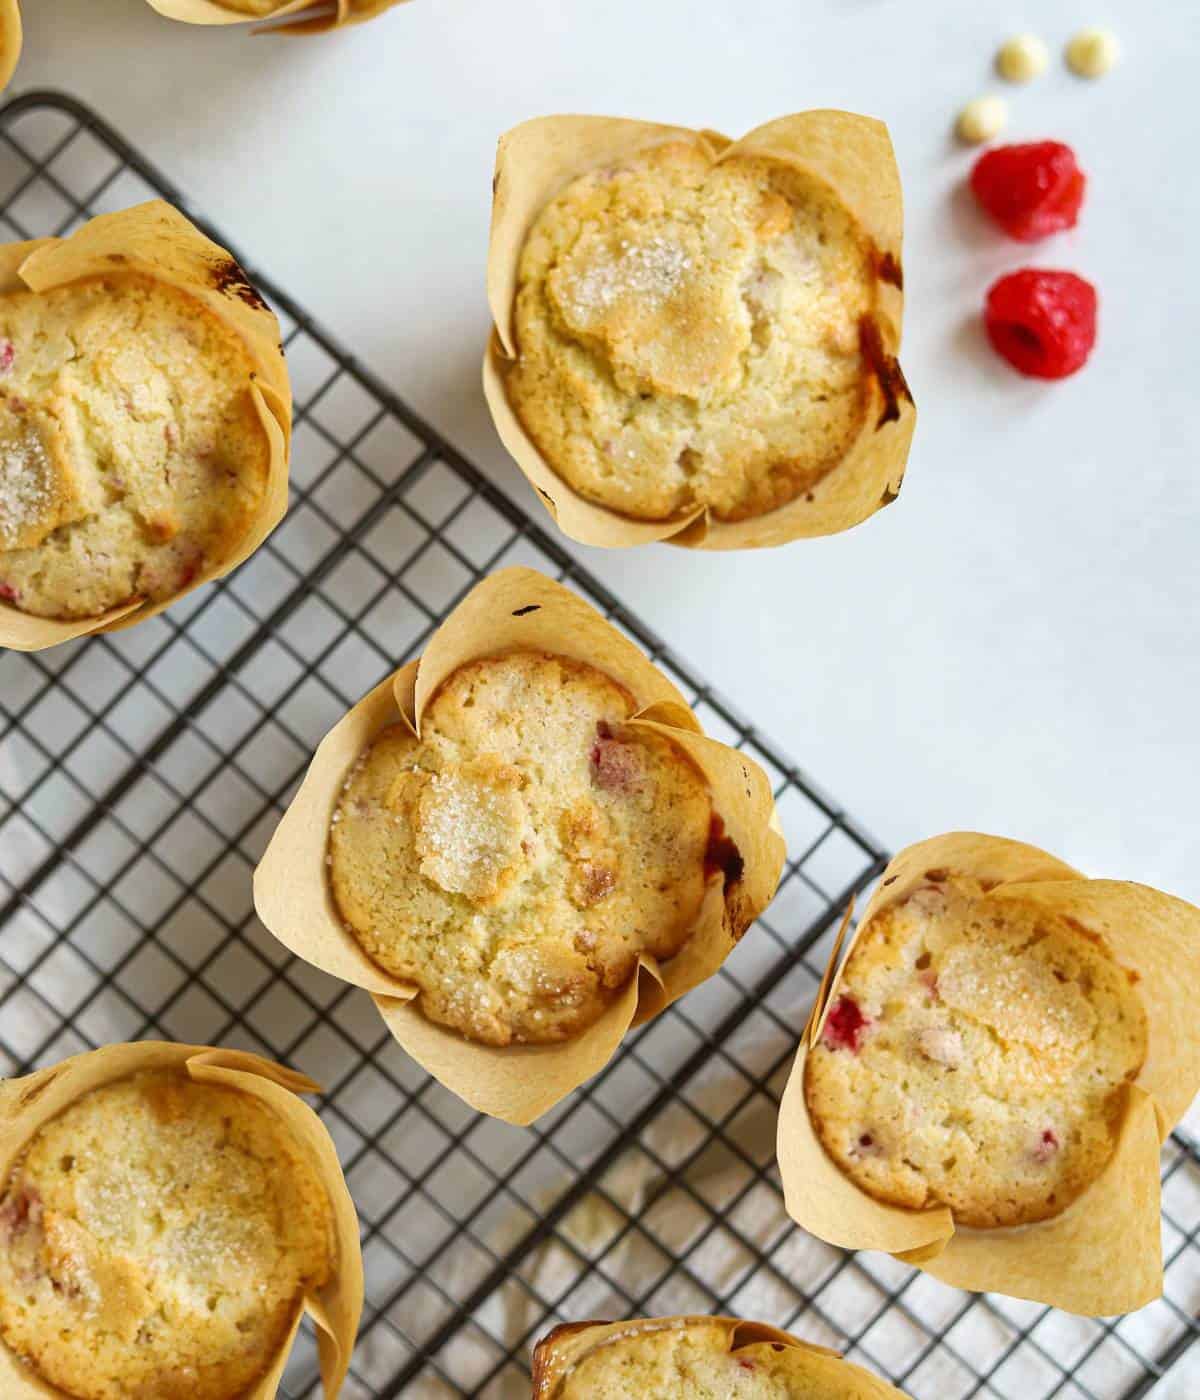 Raspberry muffins on baking rack.